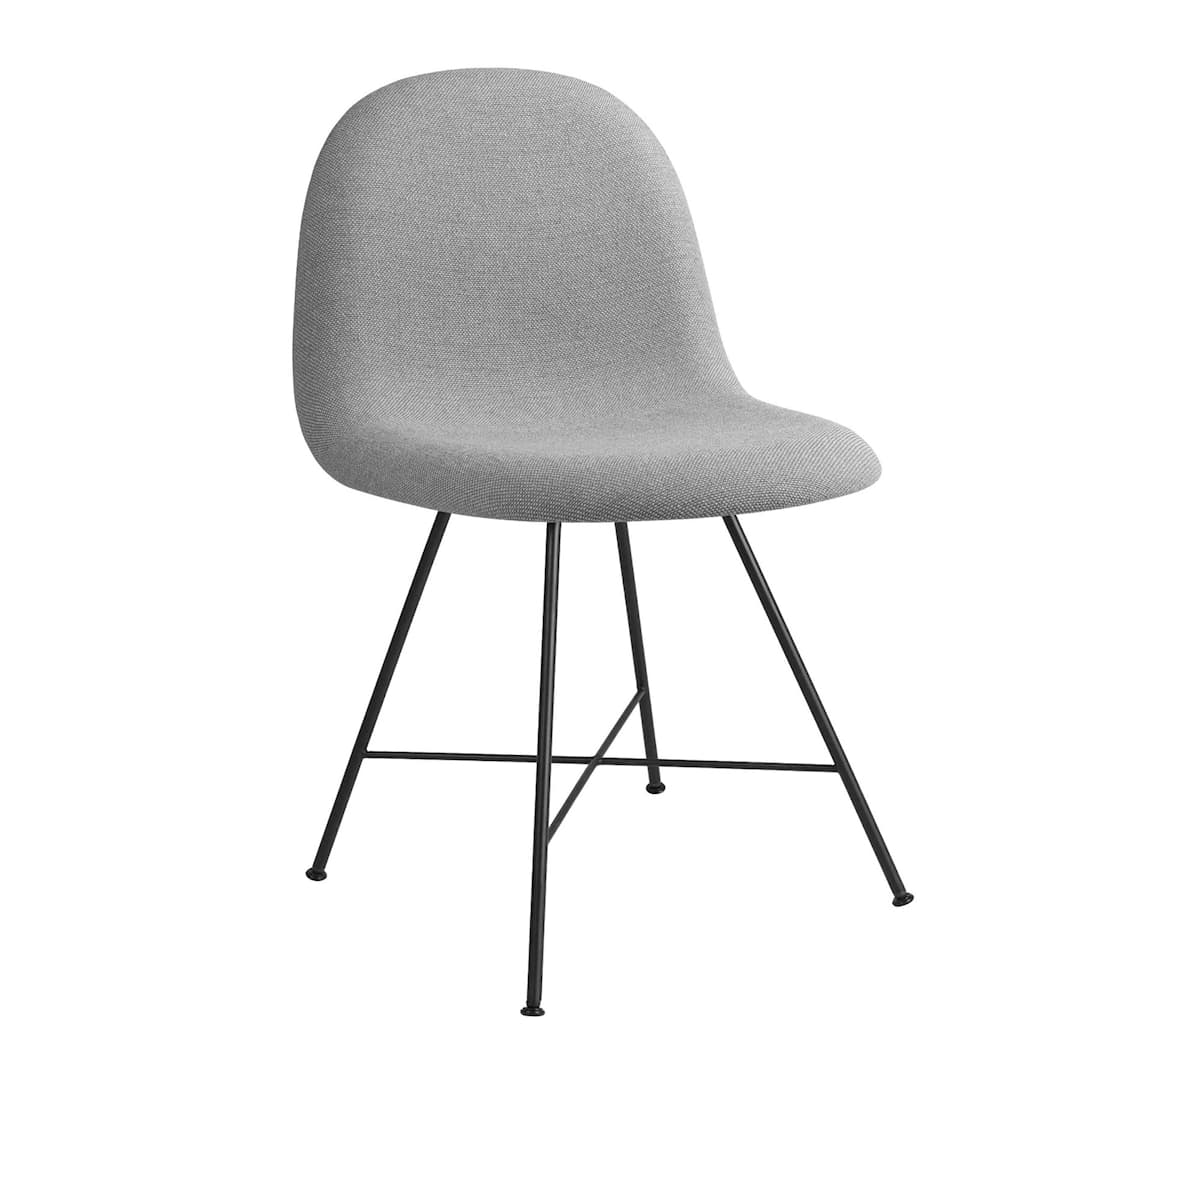 3D Dining Chair Center Base - Upholstered